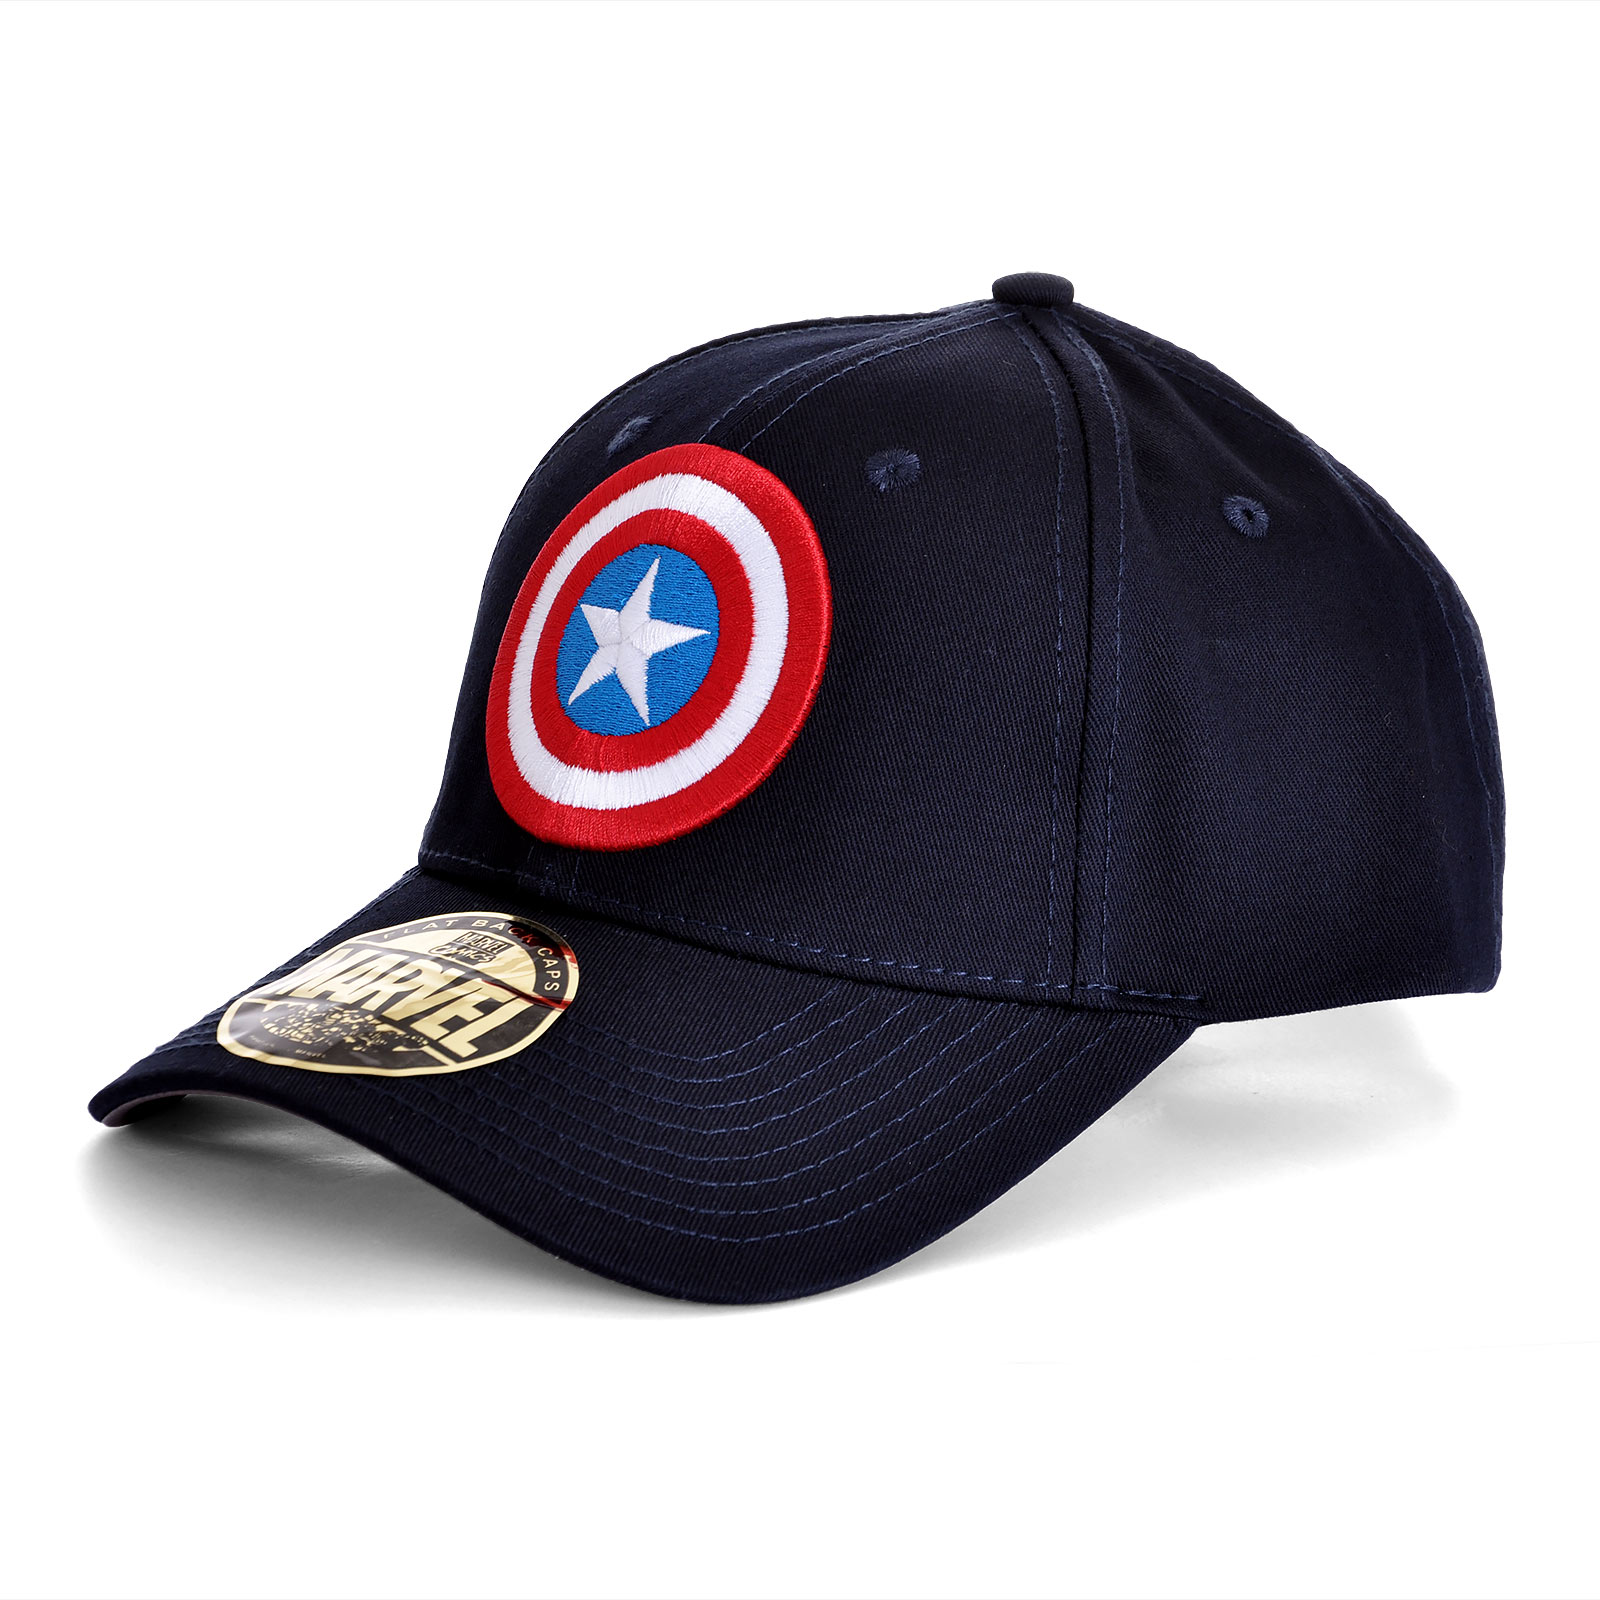 Captain America - Casquette Logo Bouclier